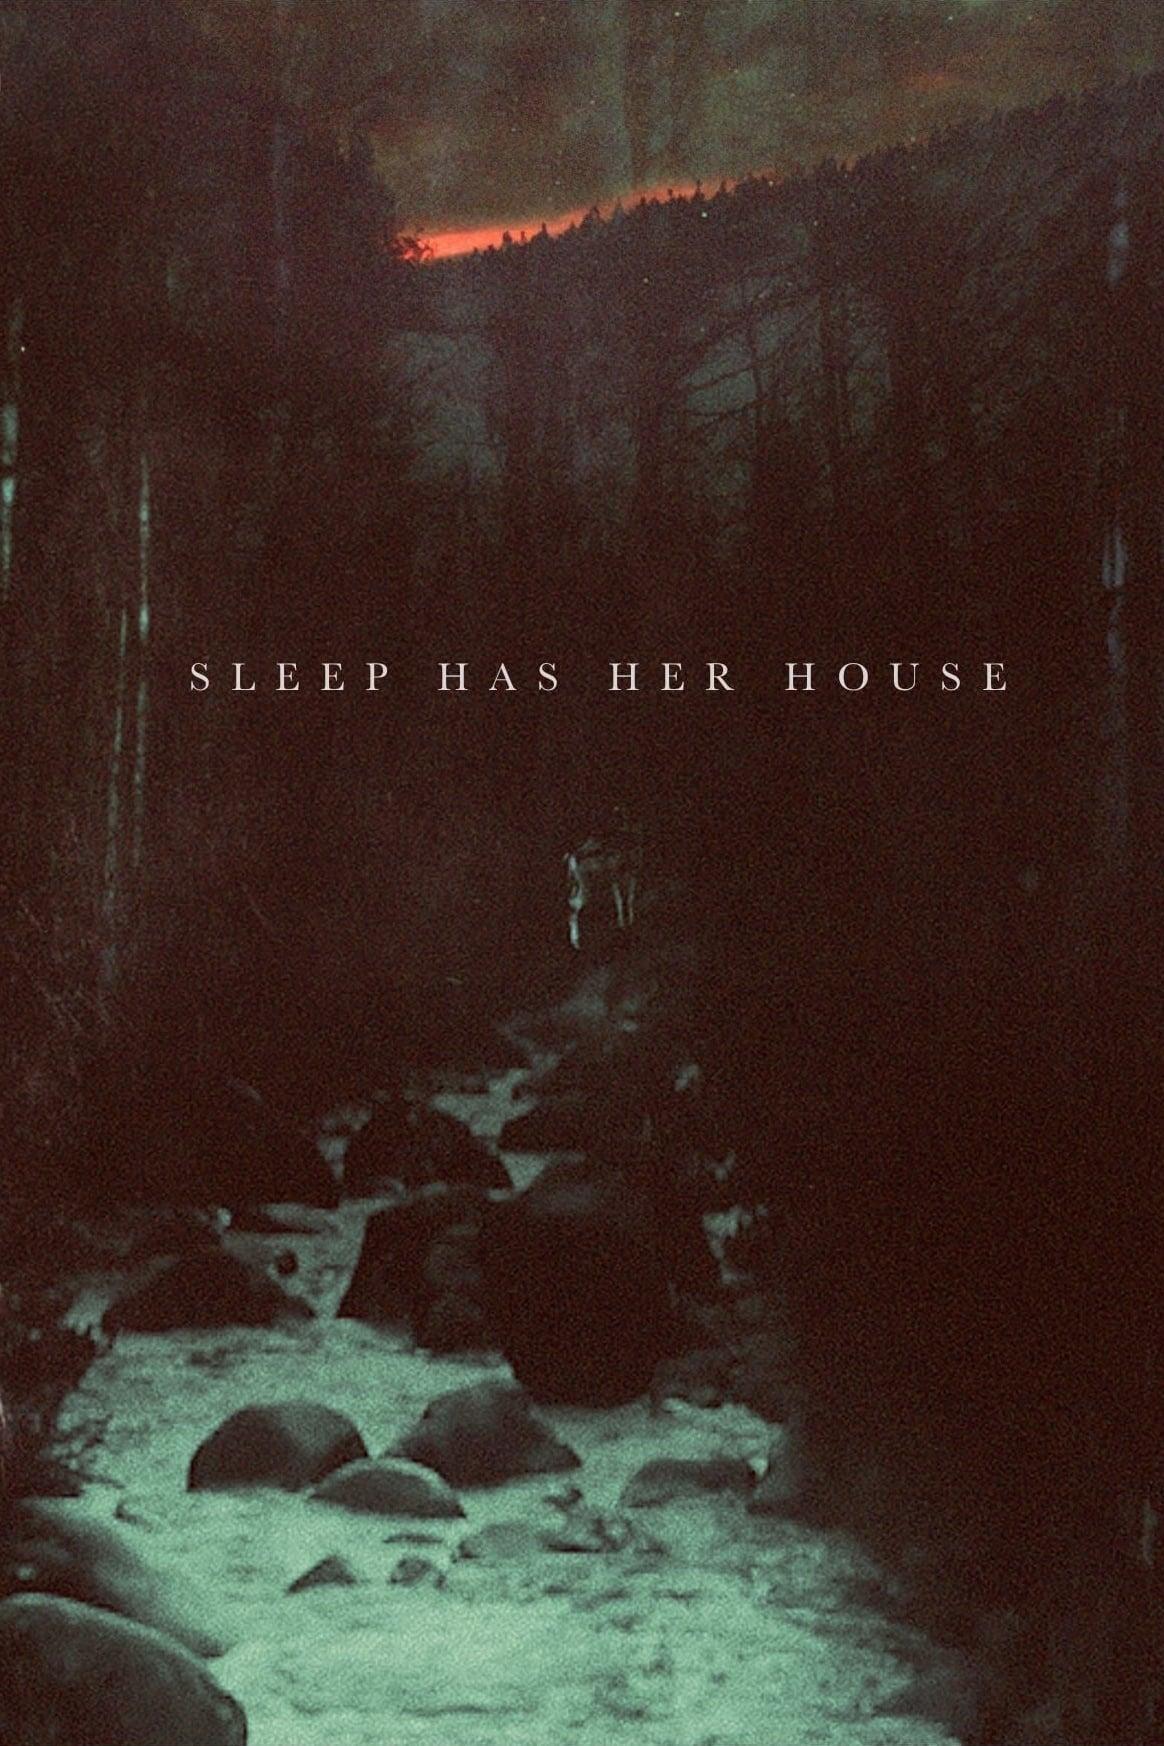 Sleep Has Her House poster